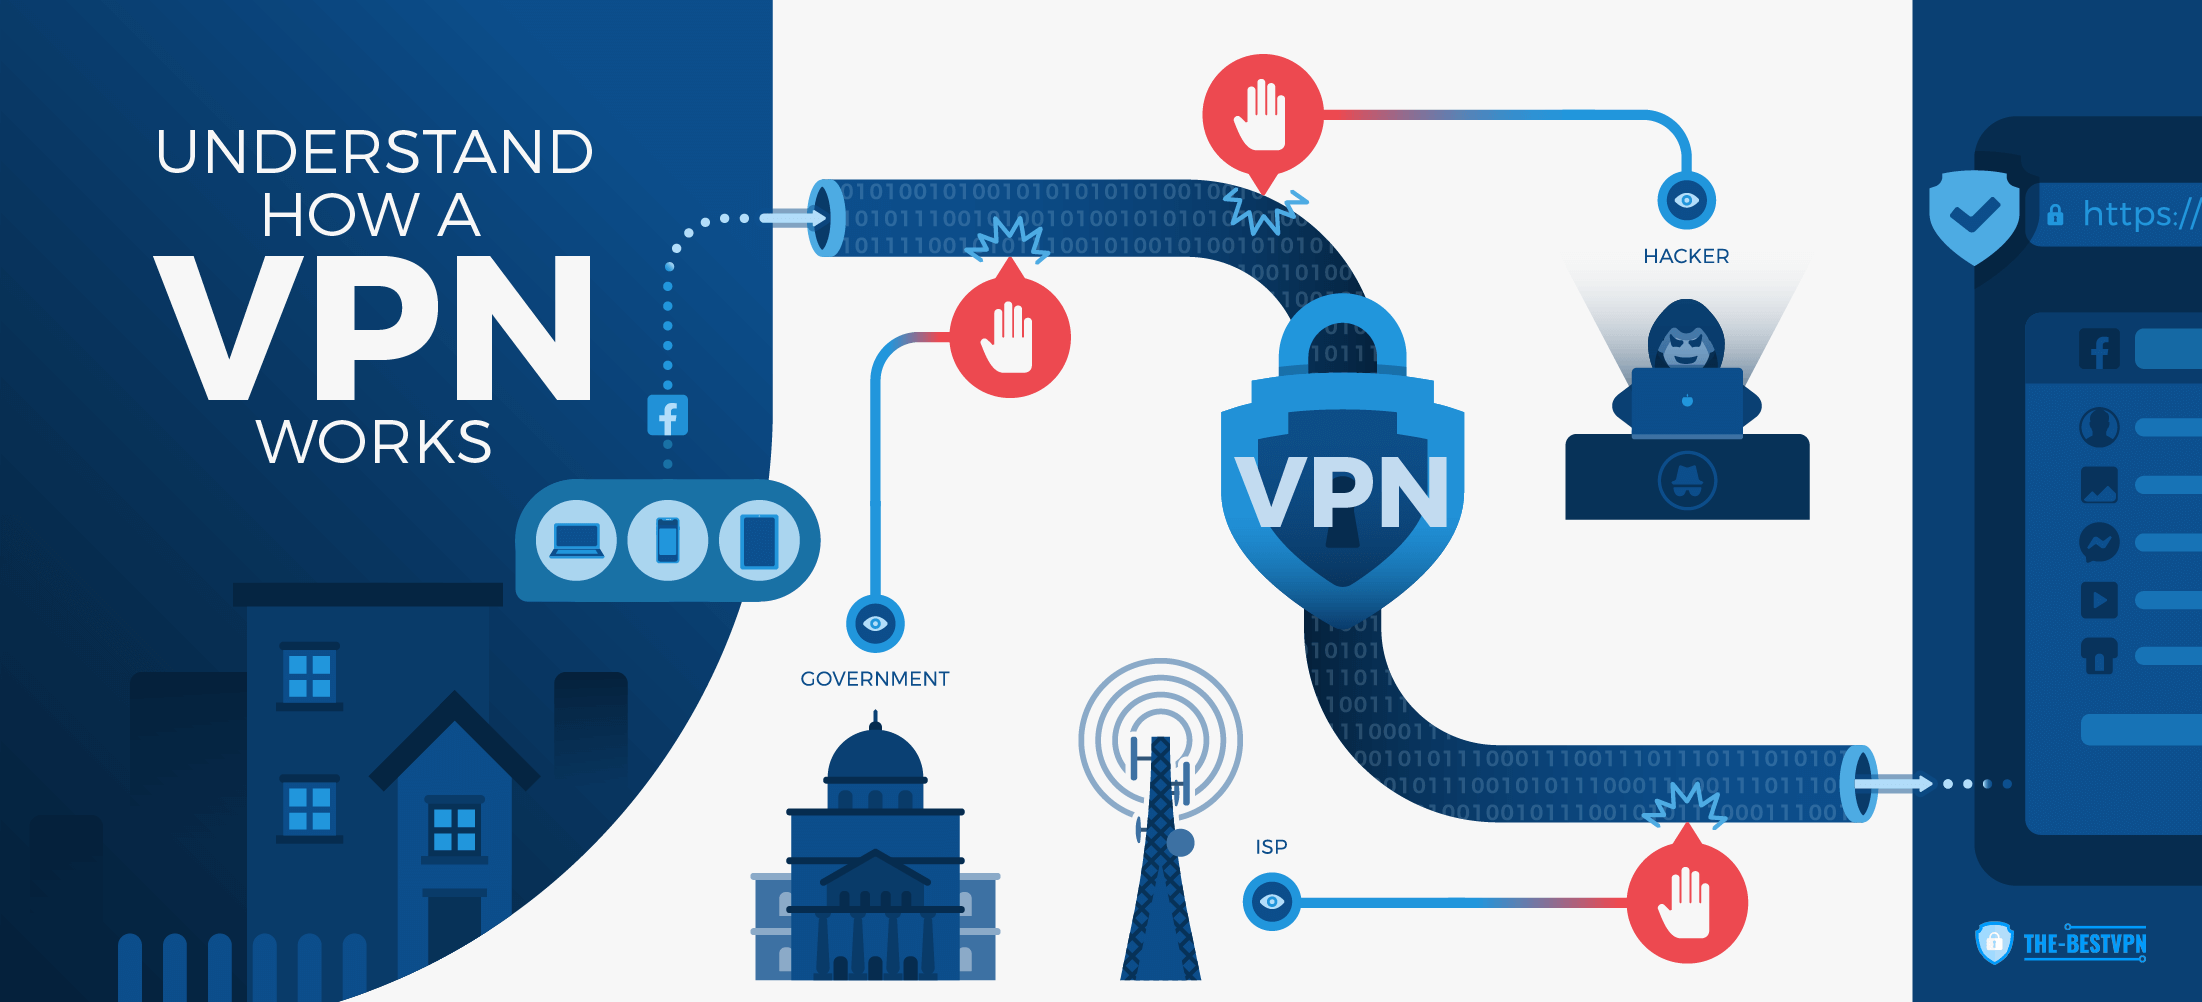 Understand how VPN works - Infographic